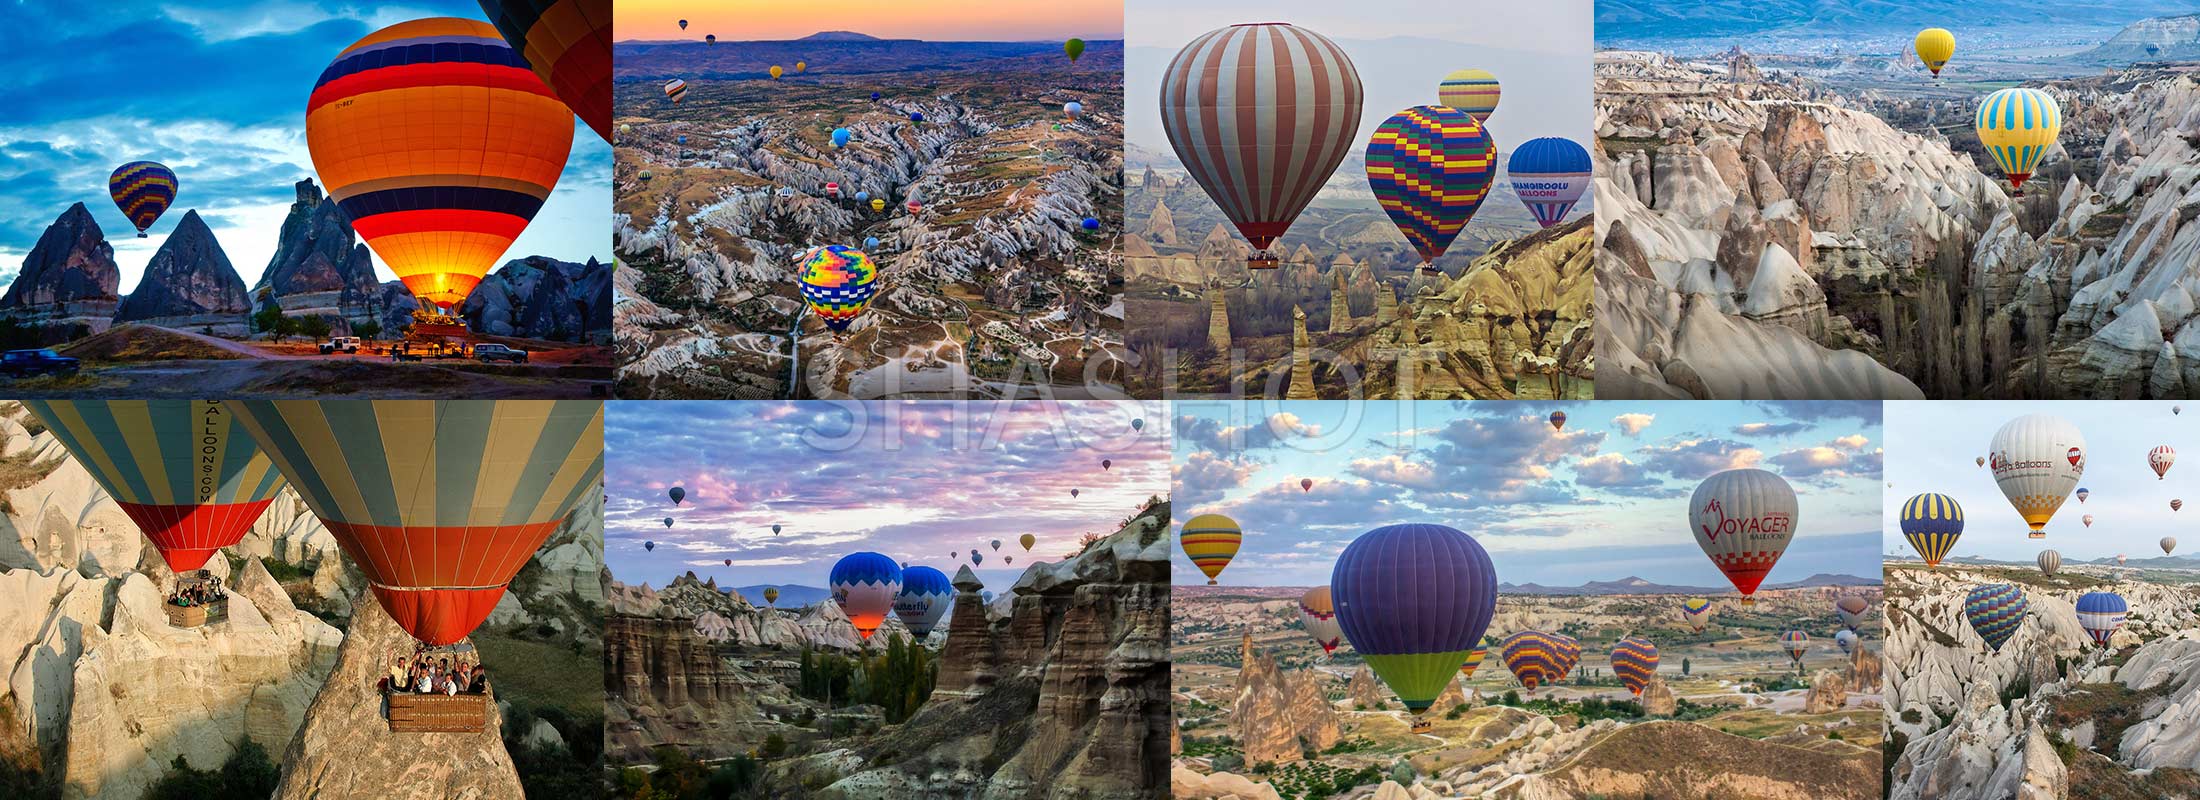 cappadocia-balloon-tour-turkey